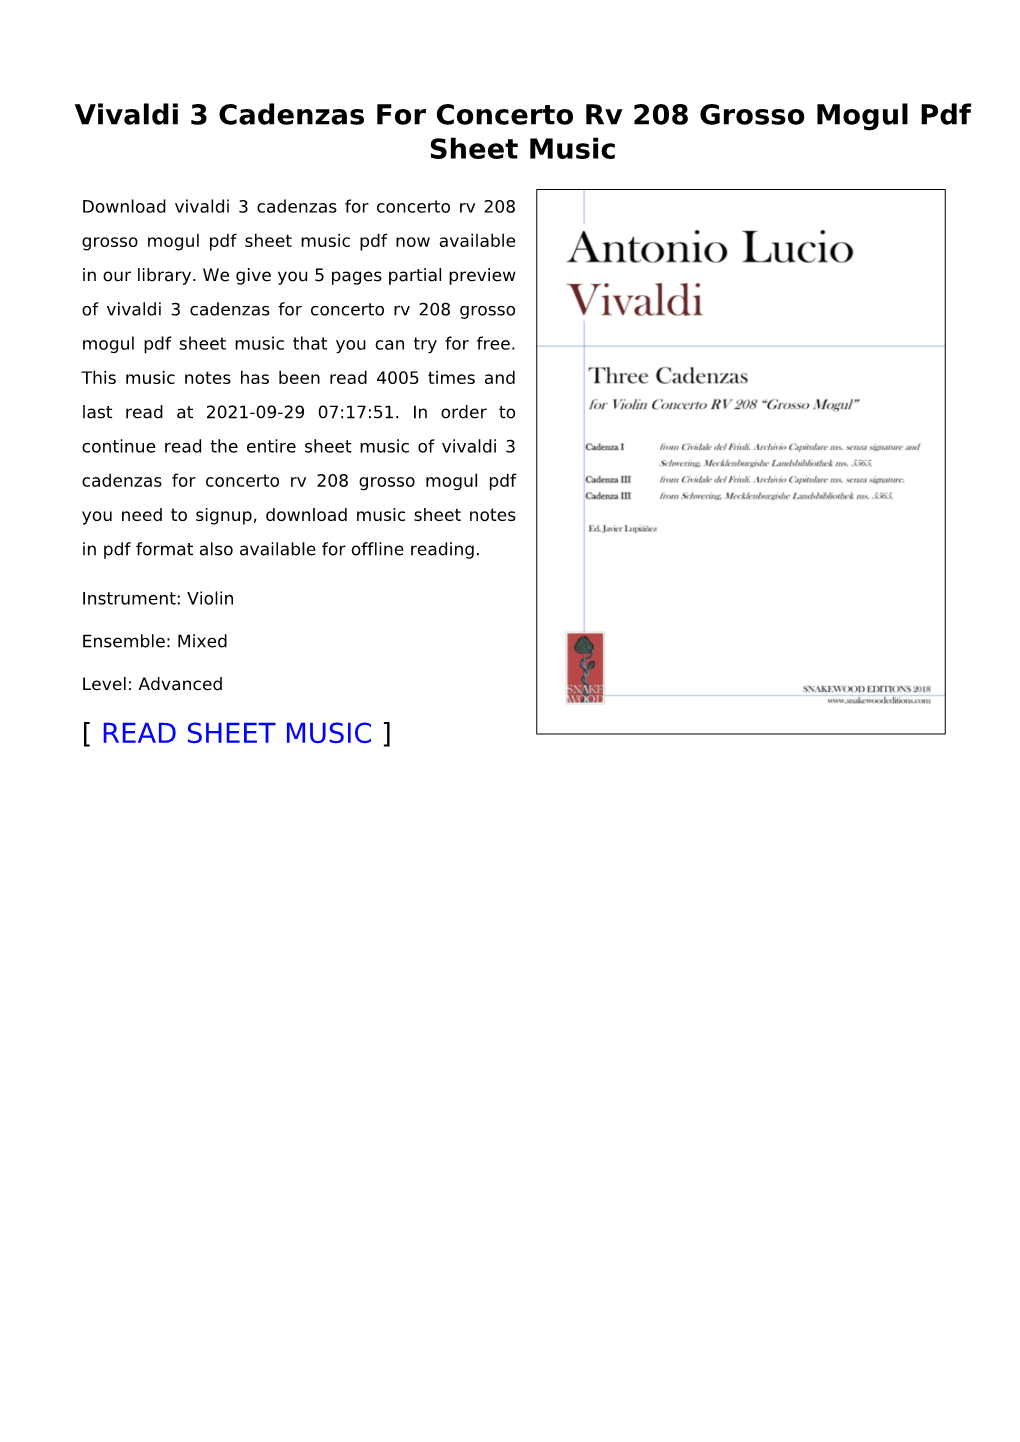 Vivaldi 3 Cadenzas for Concerto Rv 208 Grosso Mogul Pdf Sheet Music